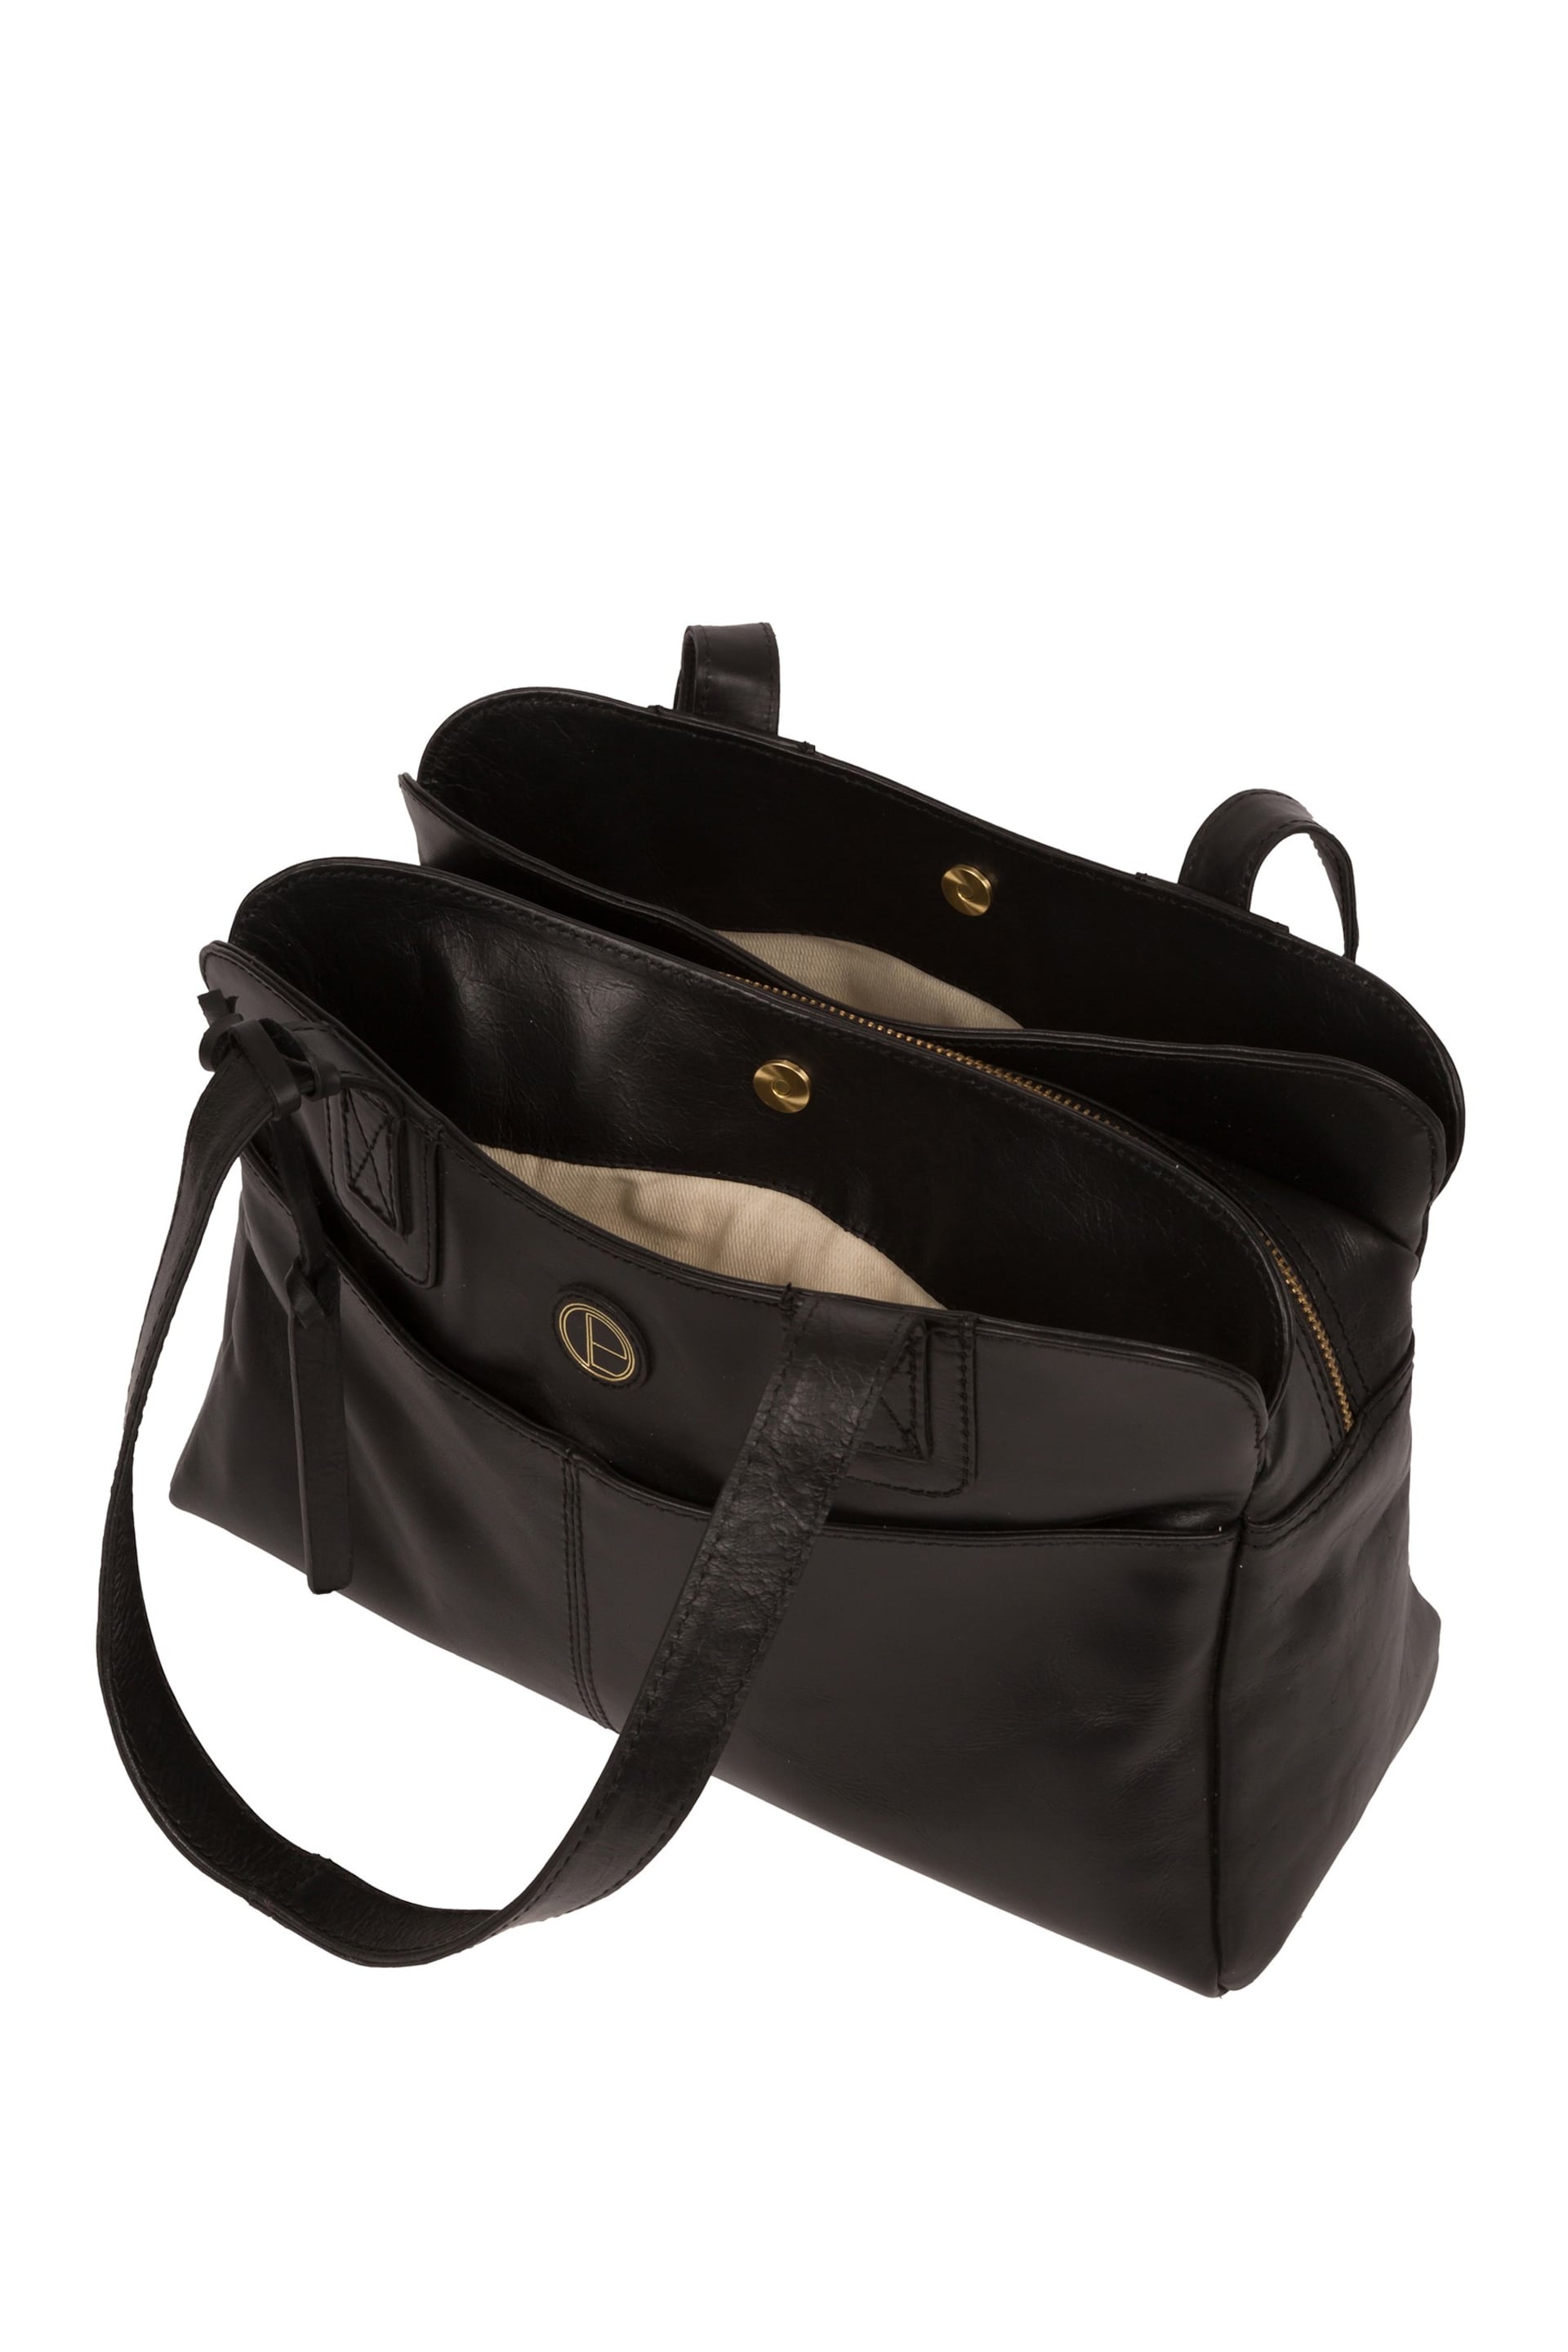 Pure Luxuries London Beacon Leather Handbag - Image 4 of 6